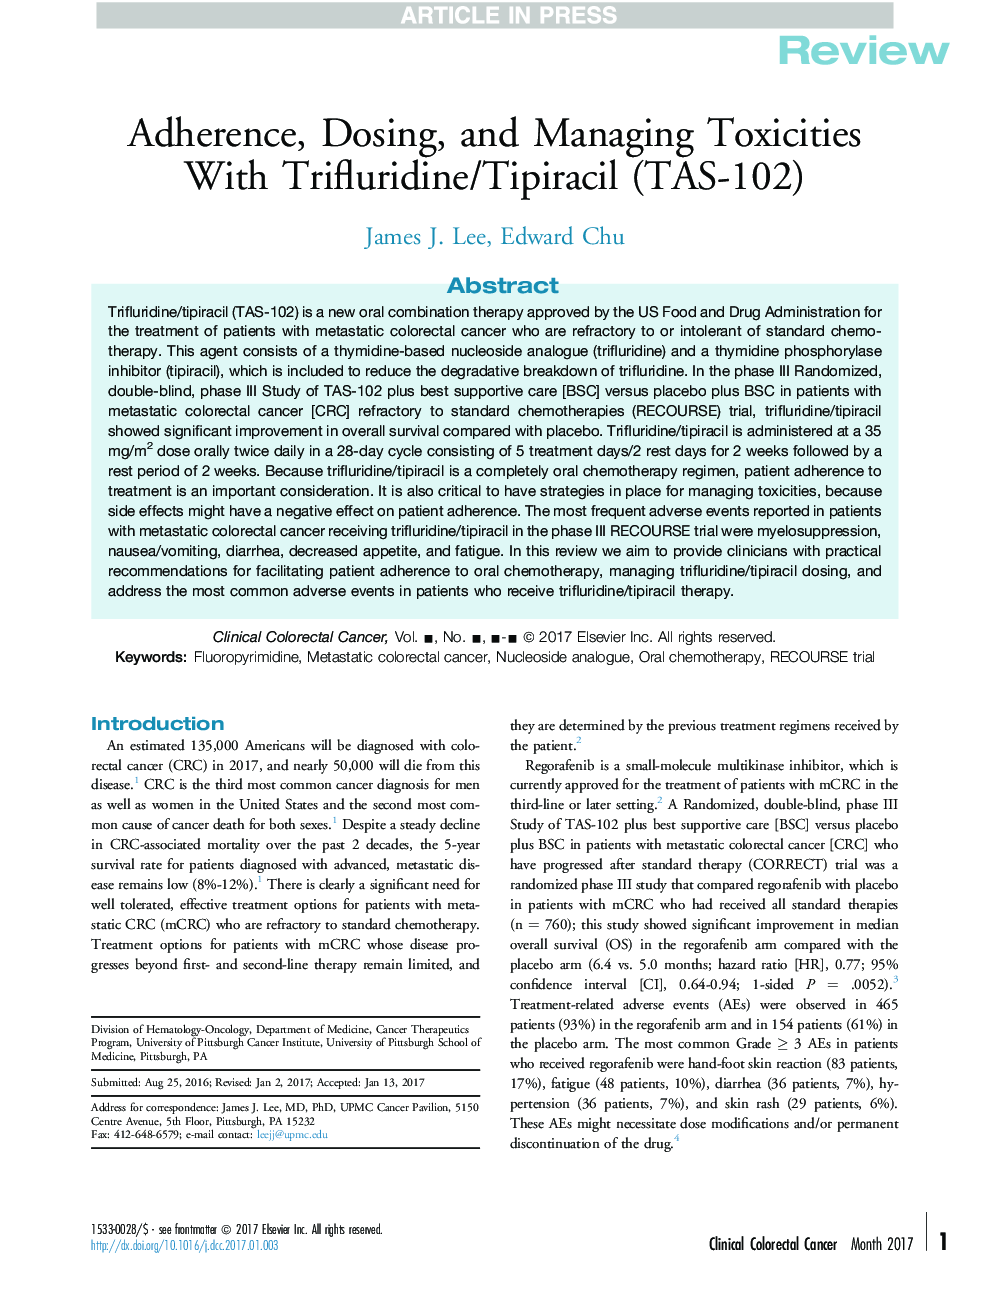 Adherence, Dosing, and Managing Toxicities With Trifluridine/Tipiracil (TAS-102)